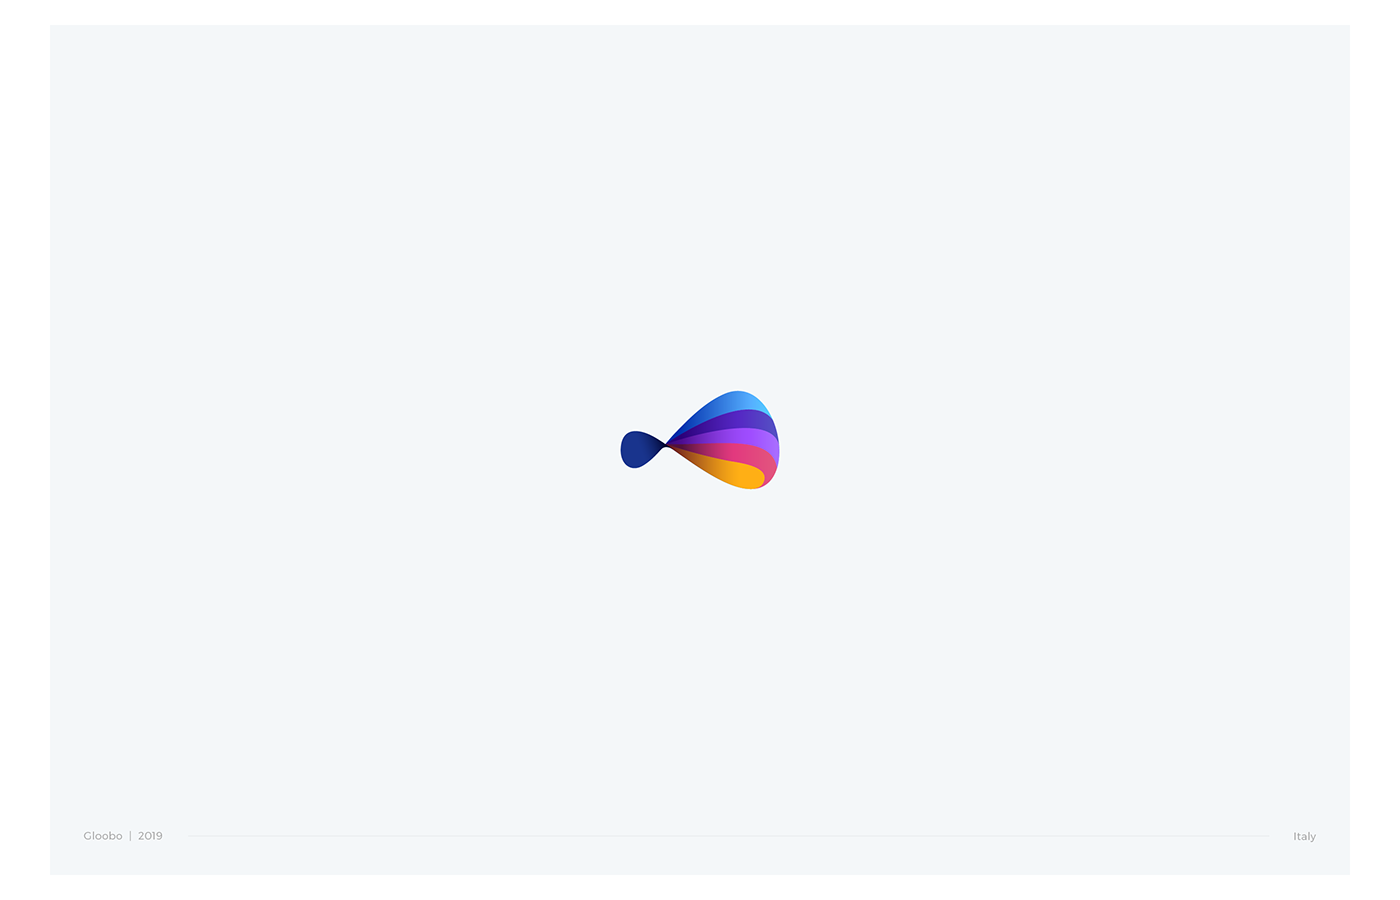 The logo mark represents a colorful hot air balloon.